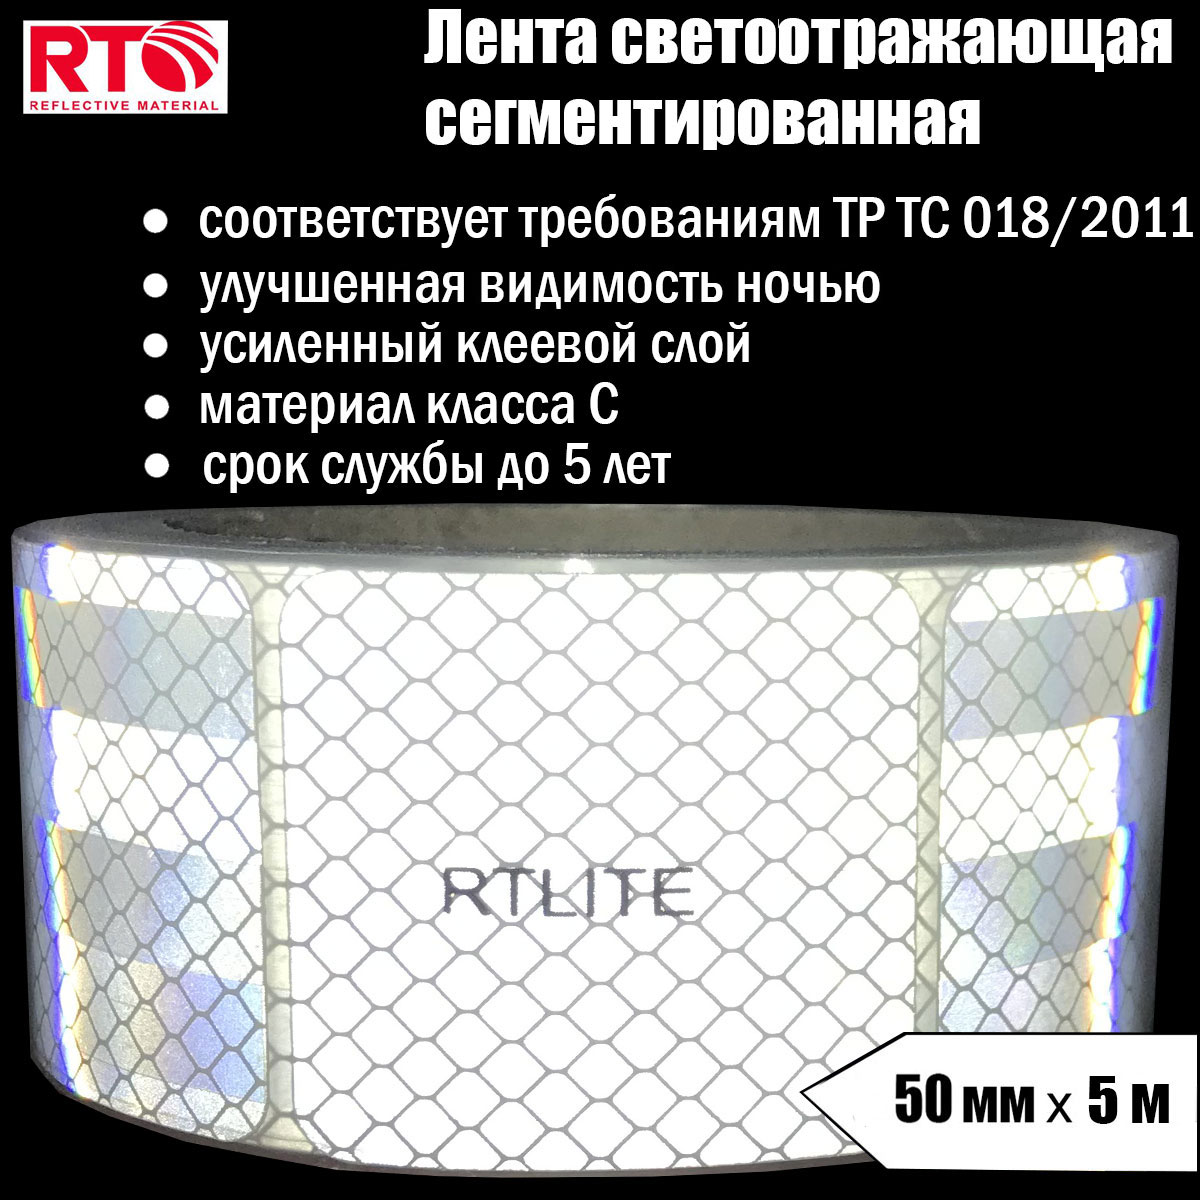 Лента светоотражающая сегментированная RTLITE RT-V104 для контурной маркировки, 50мм х 5м лента светоотражающая для контурной маркировки rtlite rt v104 50 8 мм х 50 м желтая